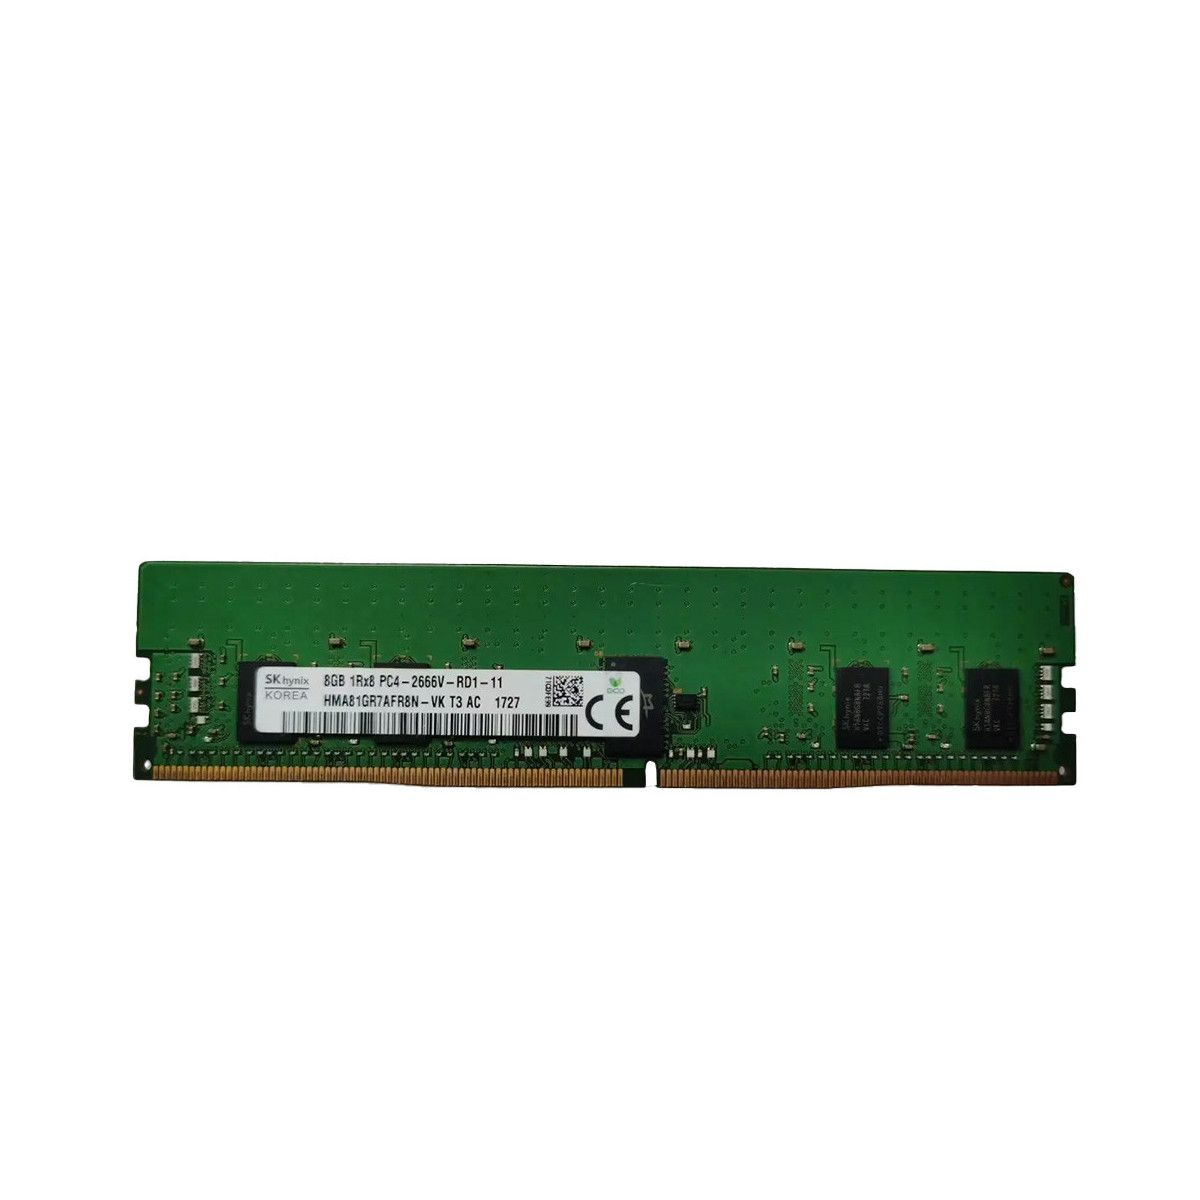 850879-001-MS - Memstar 1x 8GB DDR4-2666 RDIMM PC4-21300V-R - Mem-Star Kompatibel OEM Speichermedien 1 - Memstar 